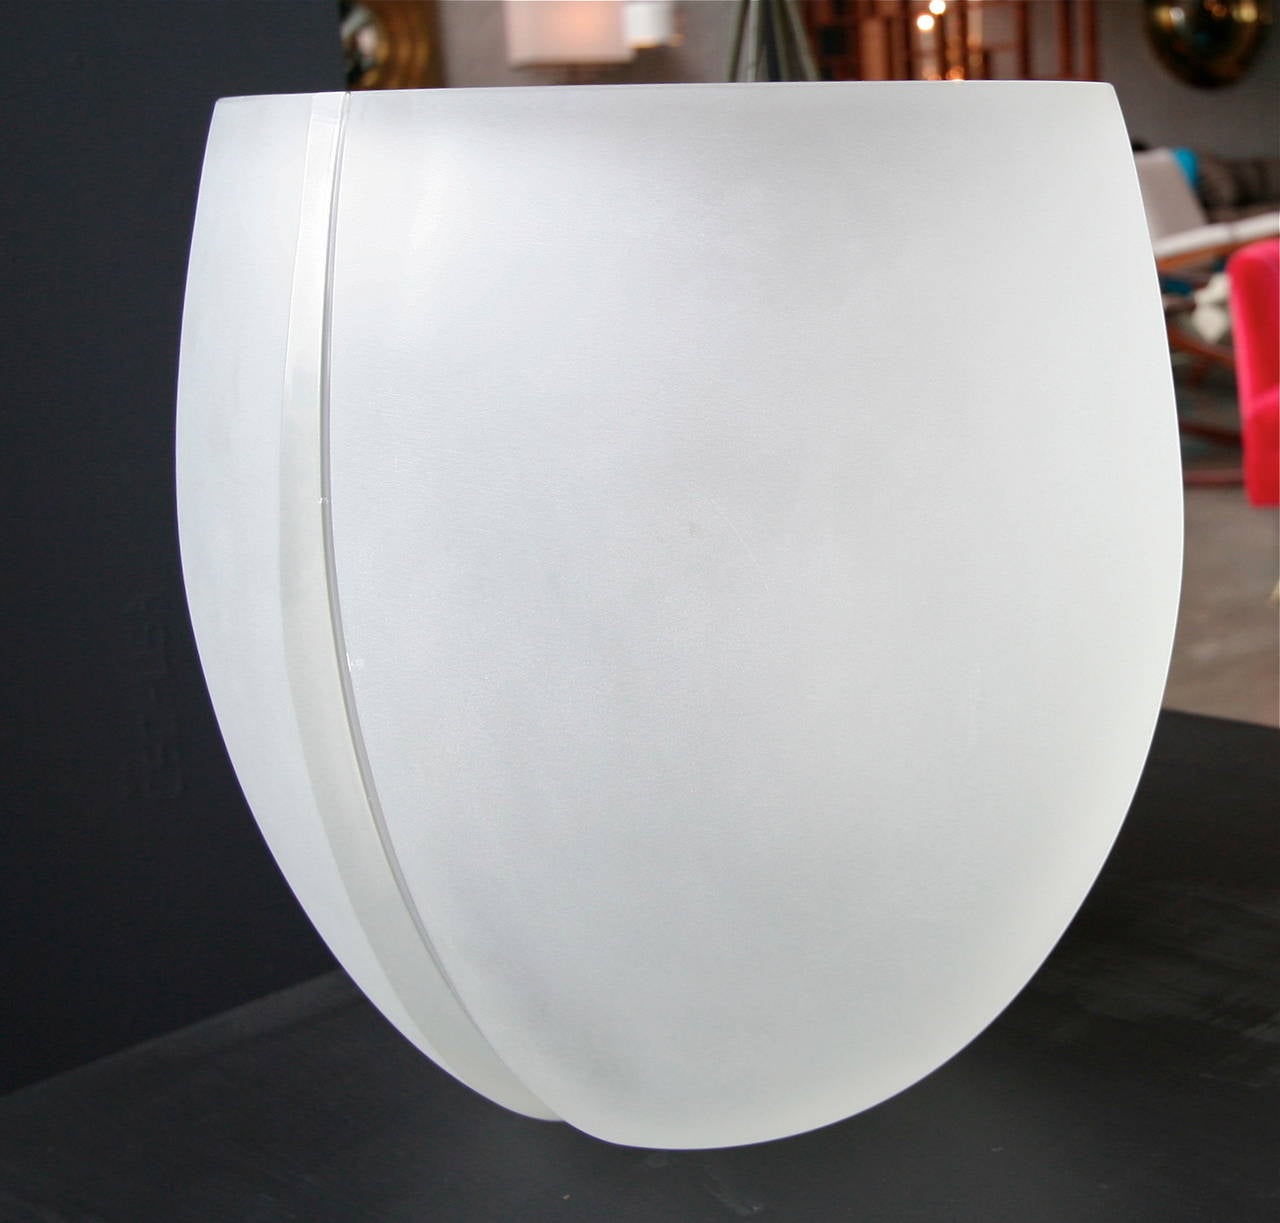 Shapes C Murano glass vase white sanded finish.